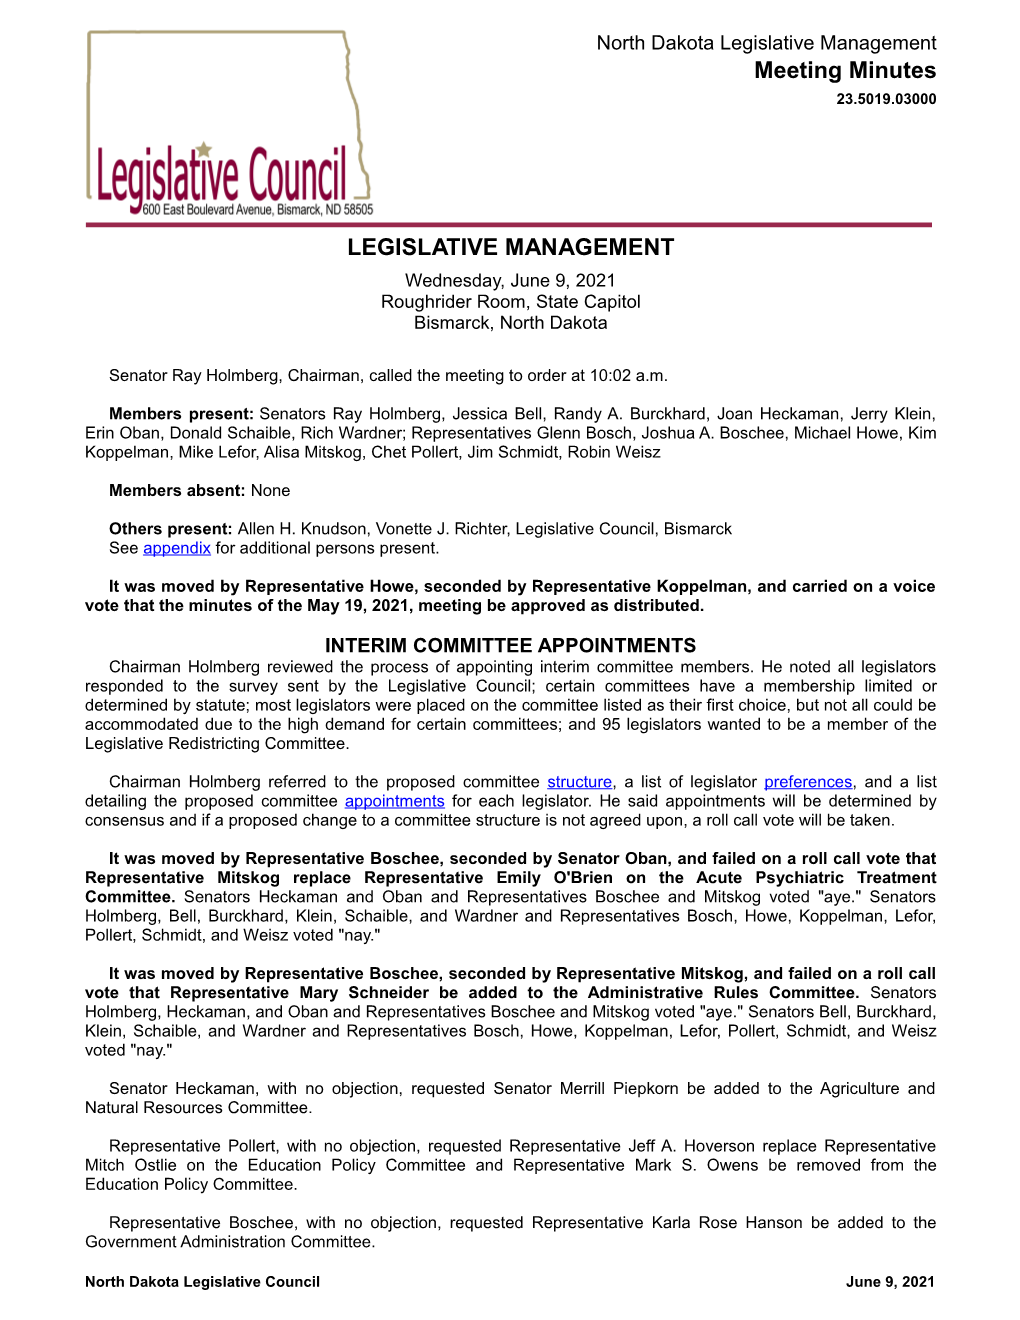 Legislative Management Meeting Minutes 23.5019.03000